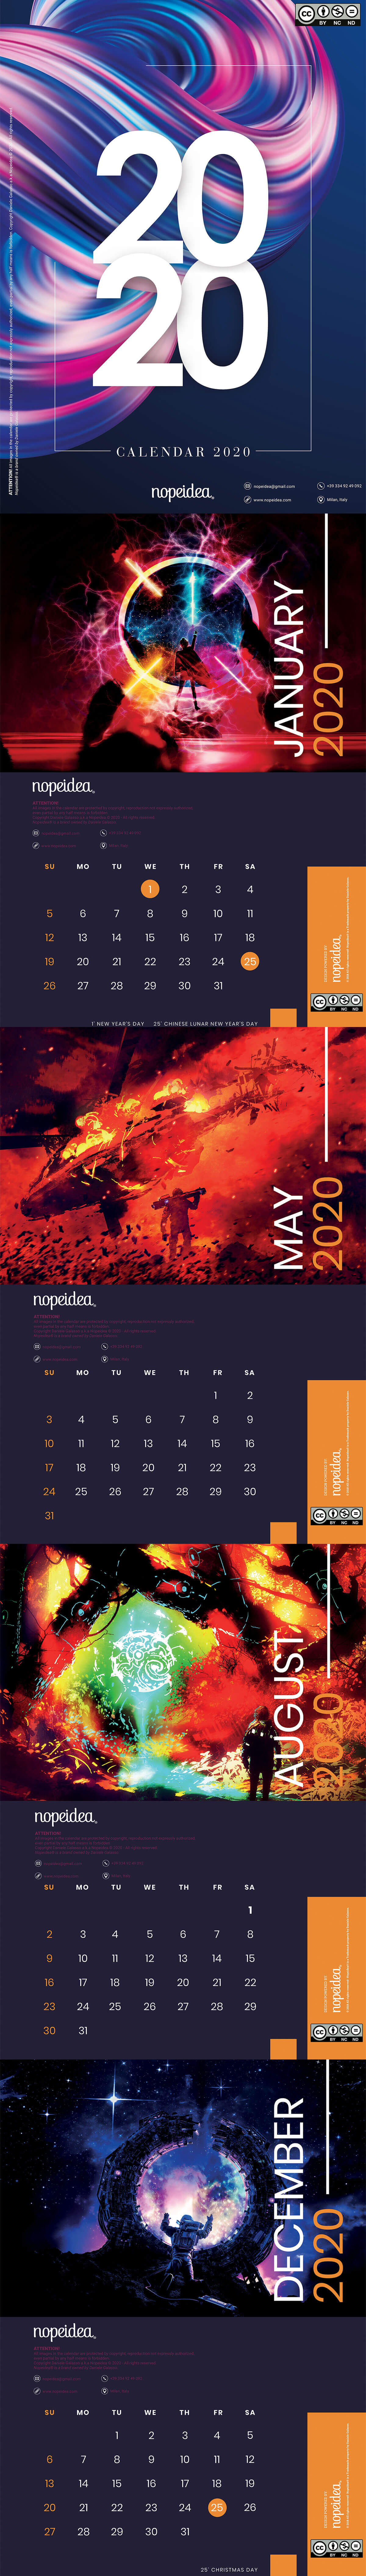 Free Digital Art Calendar 2020 Template